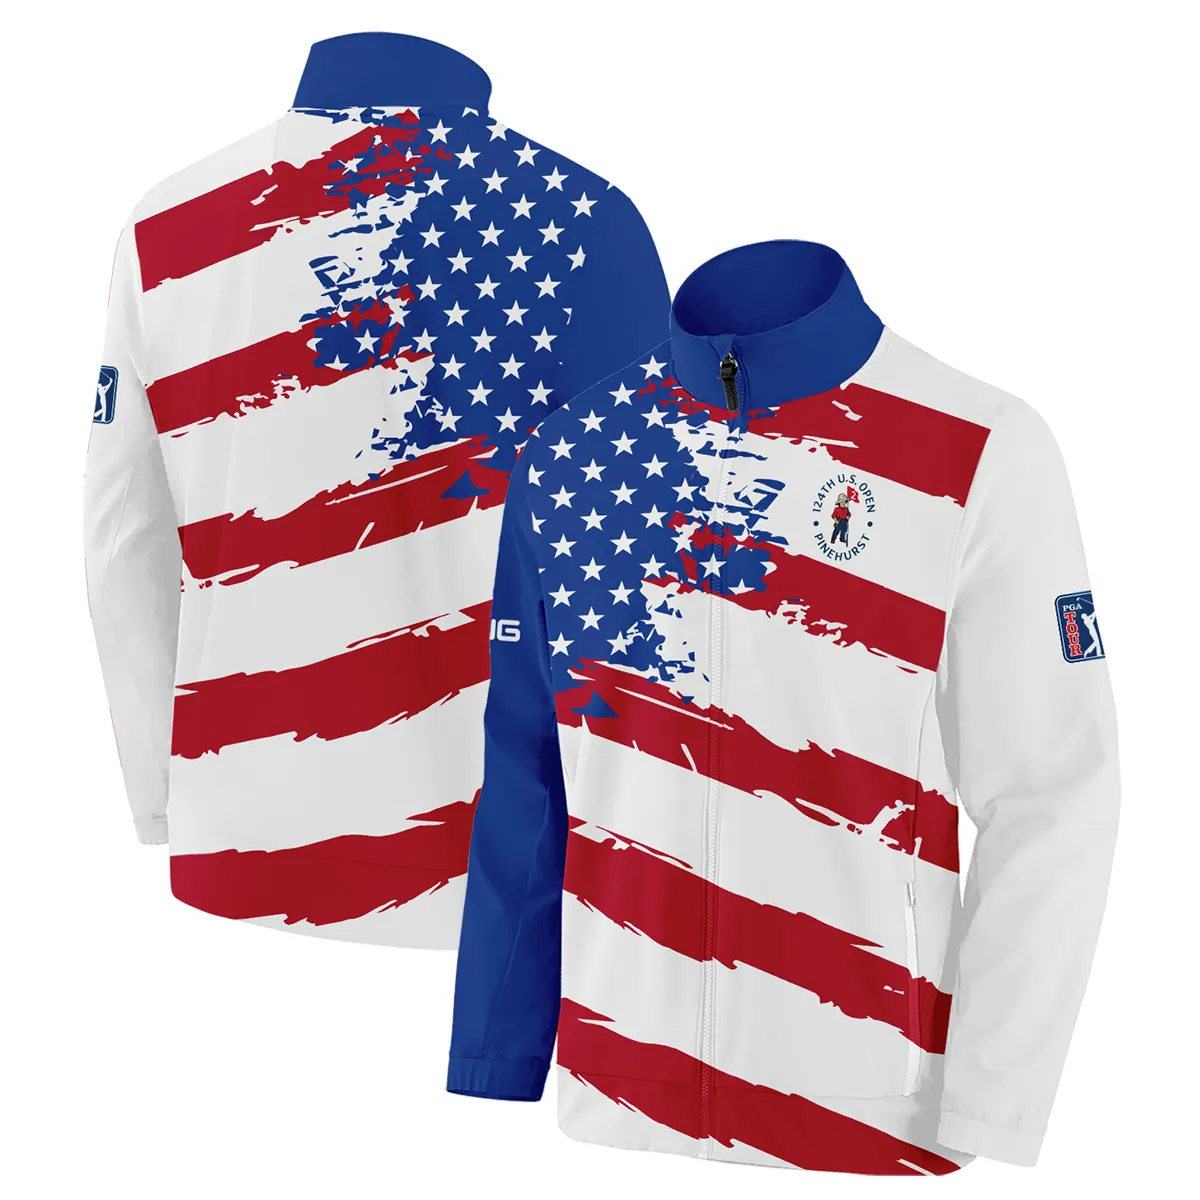 Sports Ping 124th U.S. Open Pinehurst Polo Shirt USA Flag Grunge White All Over Print Polo Shirt For Men